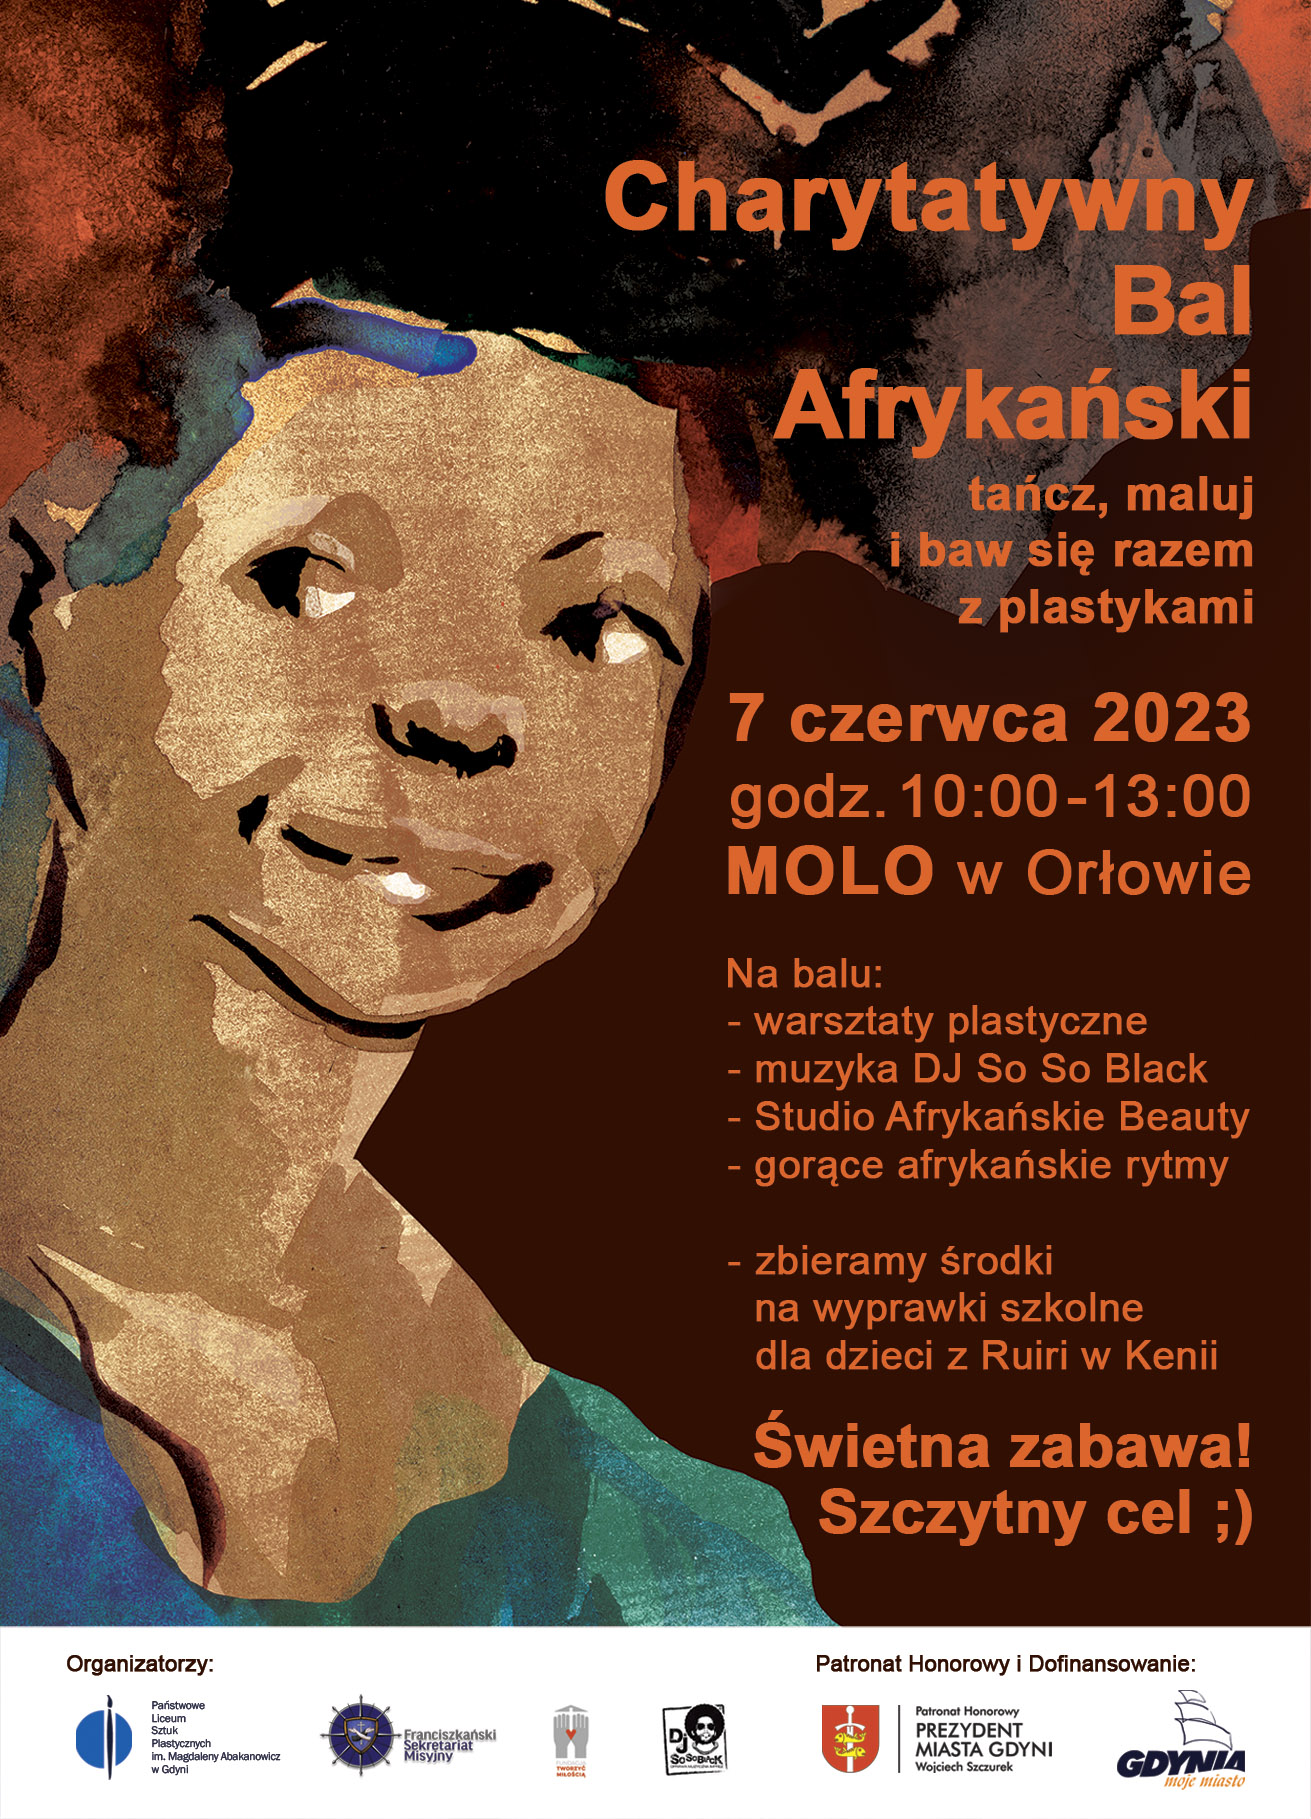 Charytatywny Bala Afrykanski